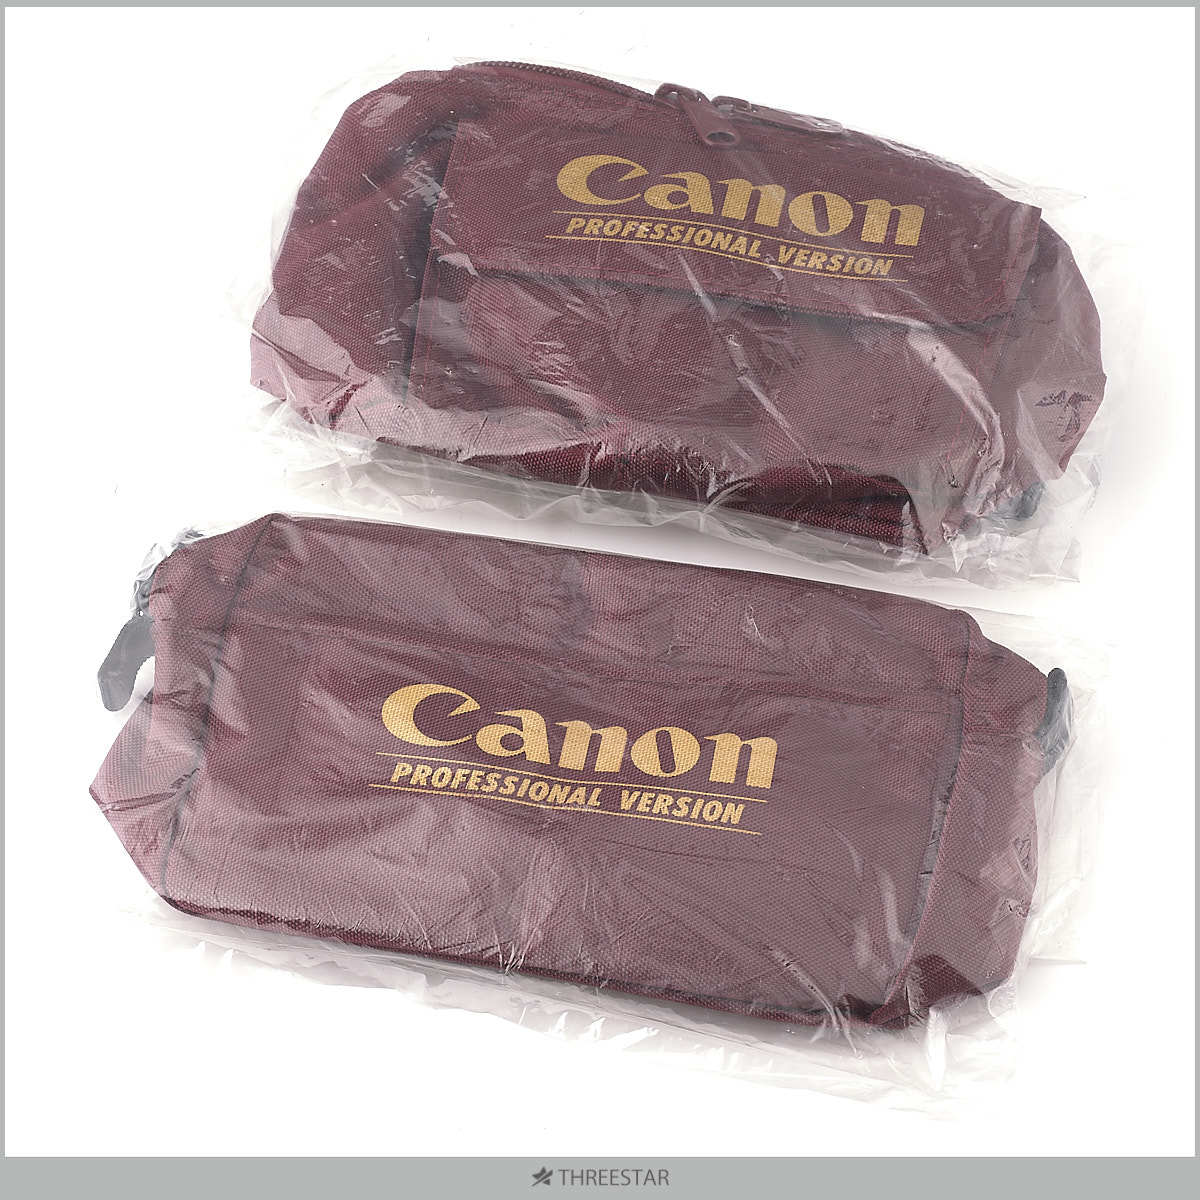 CANON PROFESSIONAL VERSION ポーチバッグ2種2個セットウェストバック